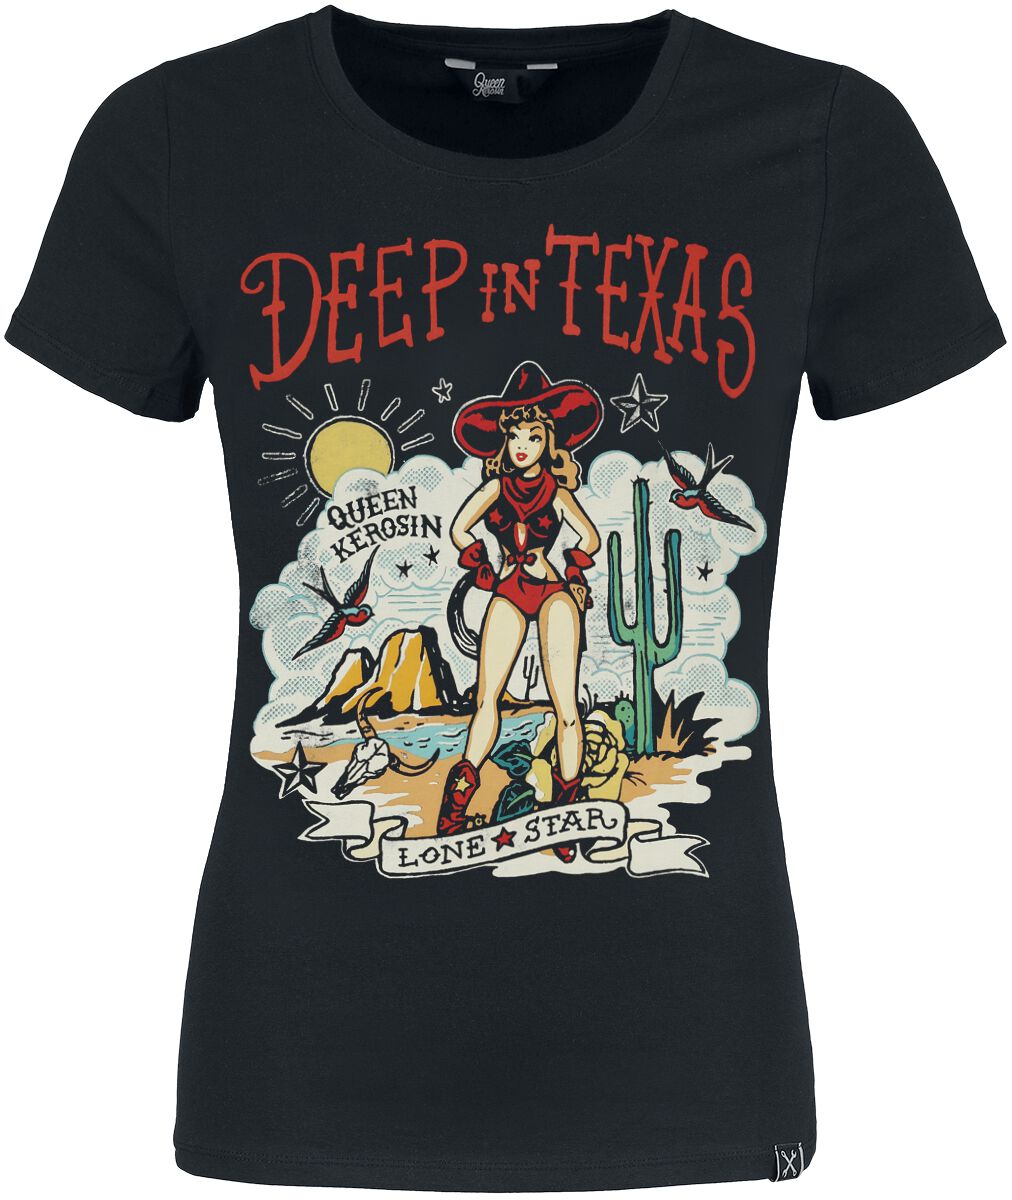 T-Shirt Manches courtes Rockabilly de Queen Kerosin - Deep In The Texas - XS à XXL - pour Femme - no